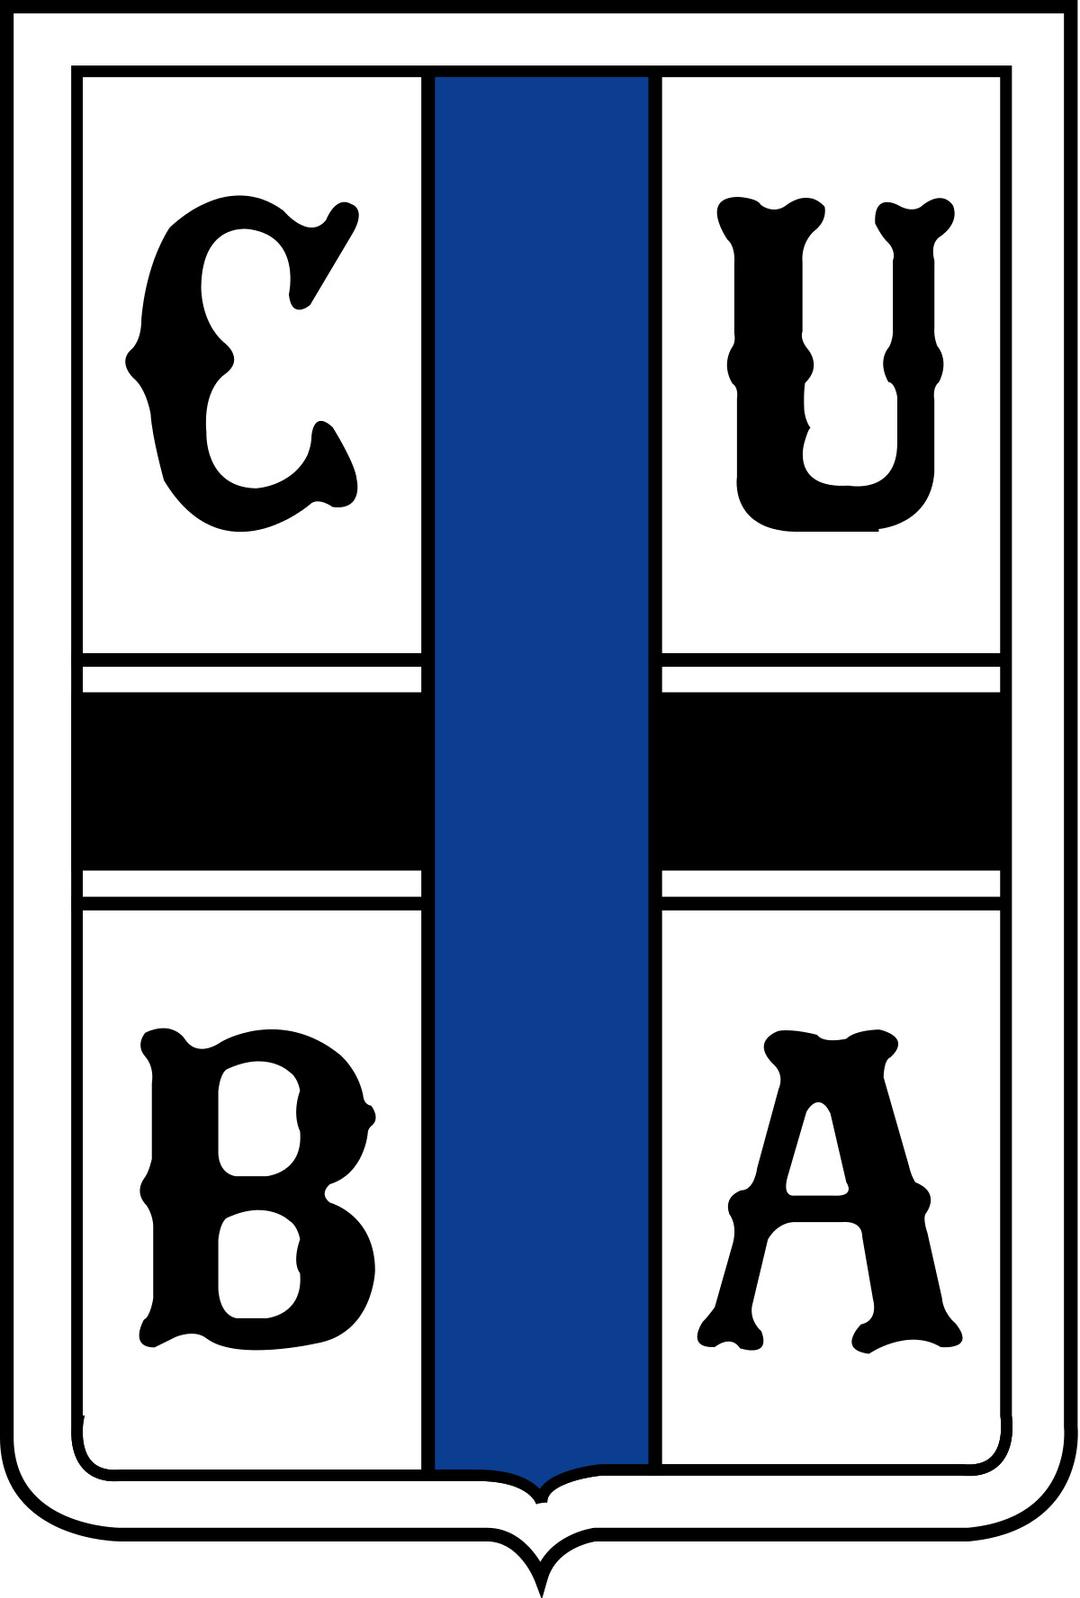 CUBA Rugby Logo png transparent